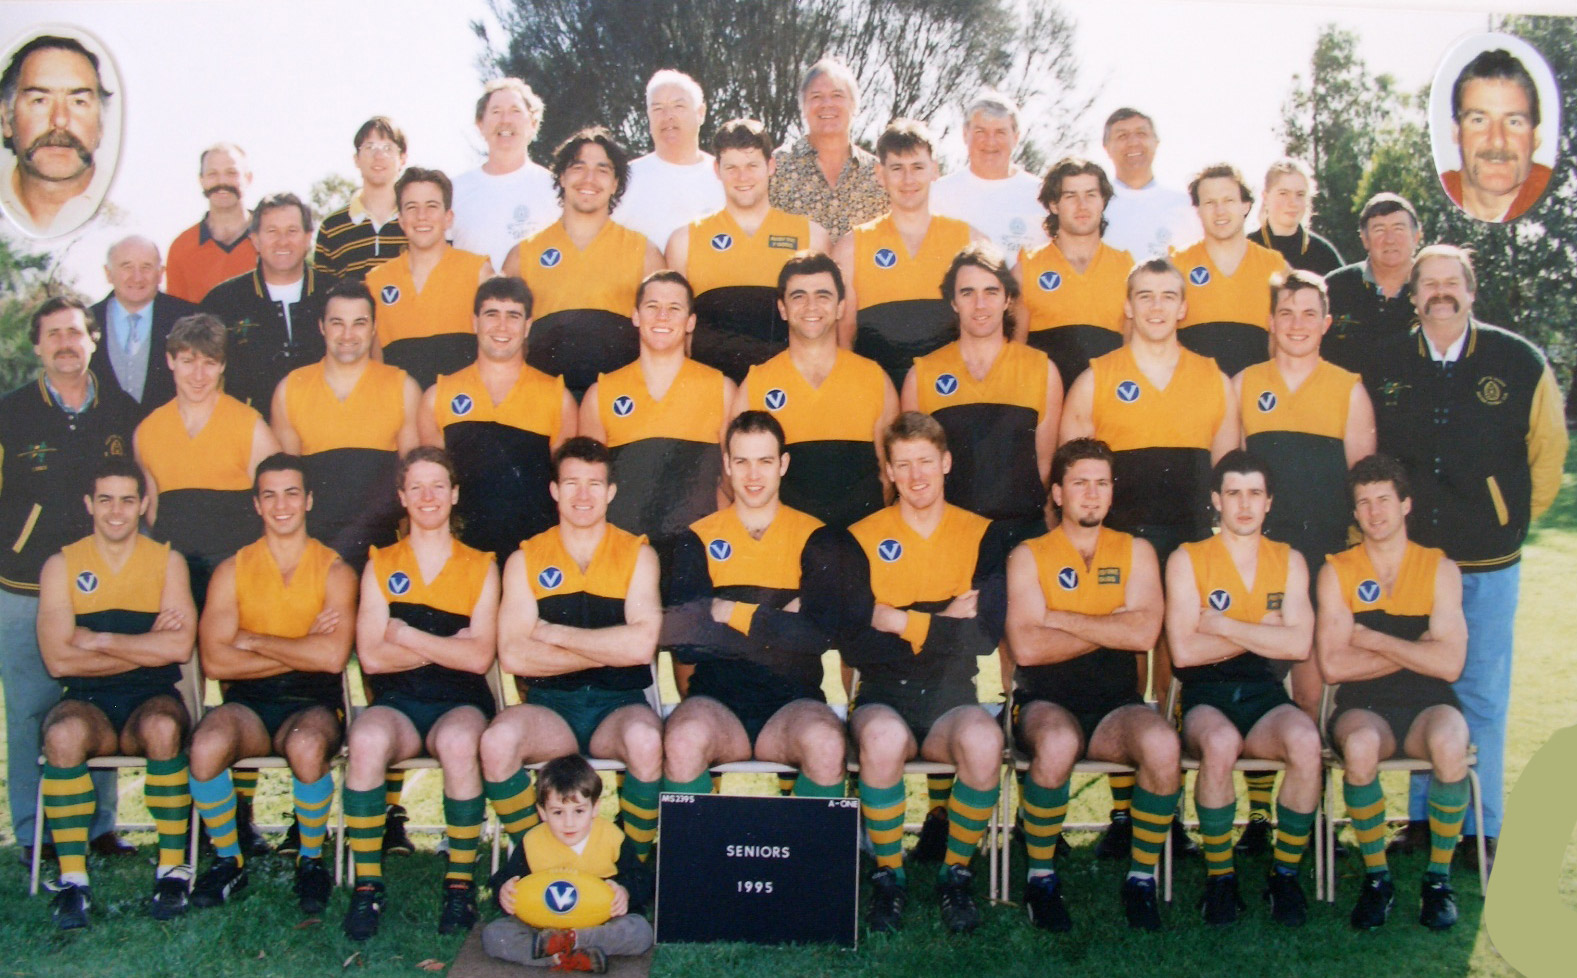 1995-seniors-team-photo-1